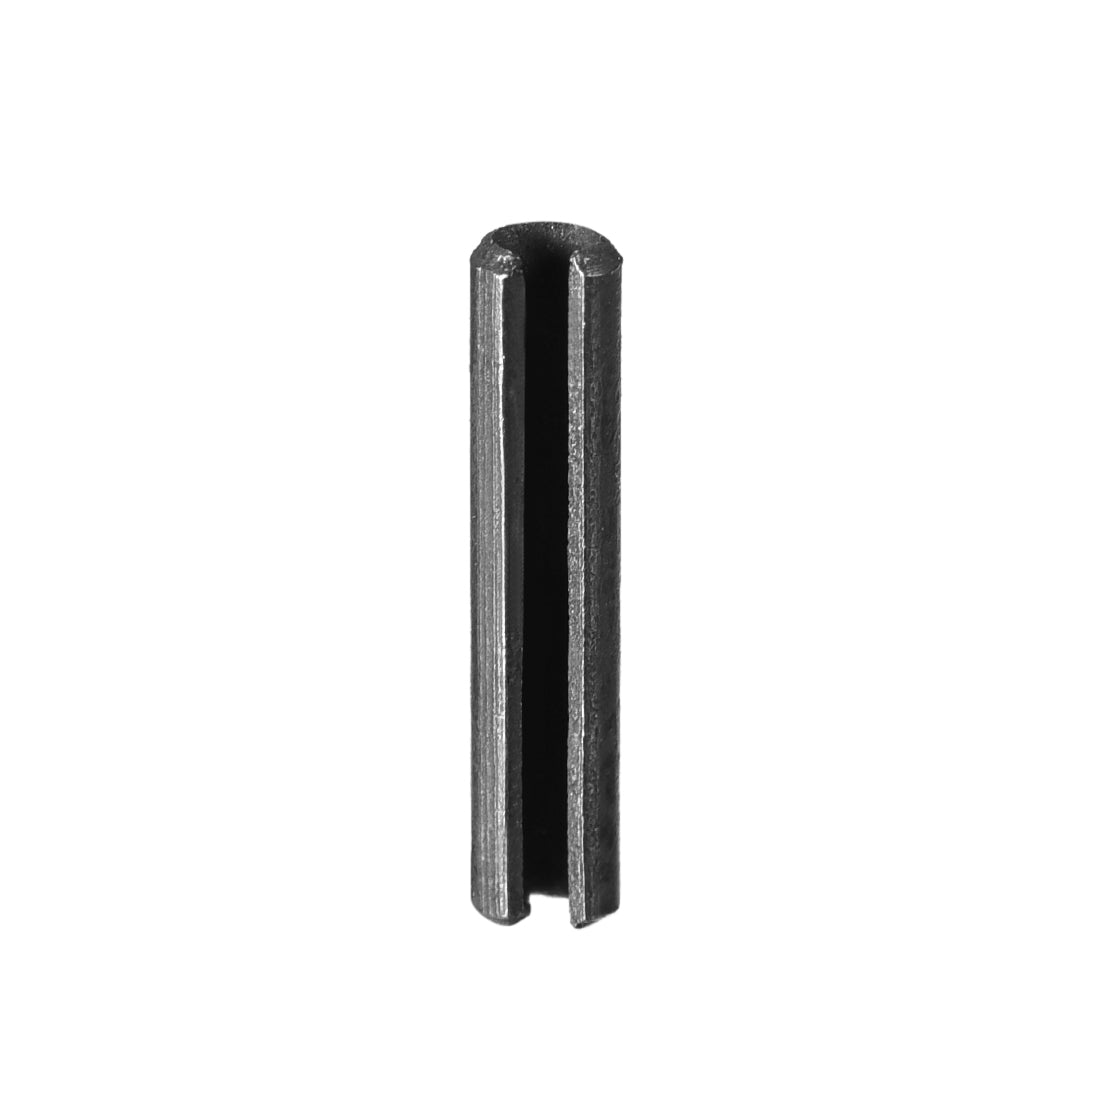 uxcell Uxcell 1.7mm x 8mm Dowel Pin Carbon Steel Split Spring Roll Shelf Support Pin Fasten Hardware Black 20 Pcs